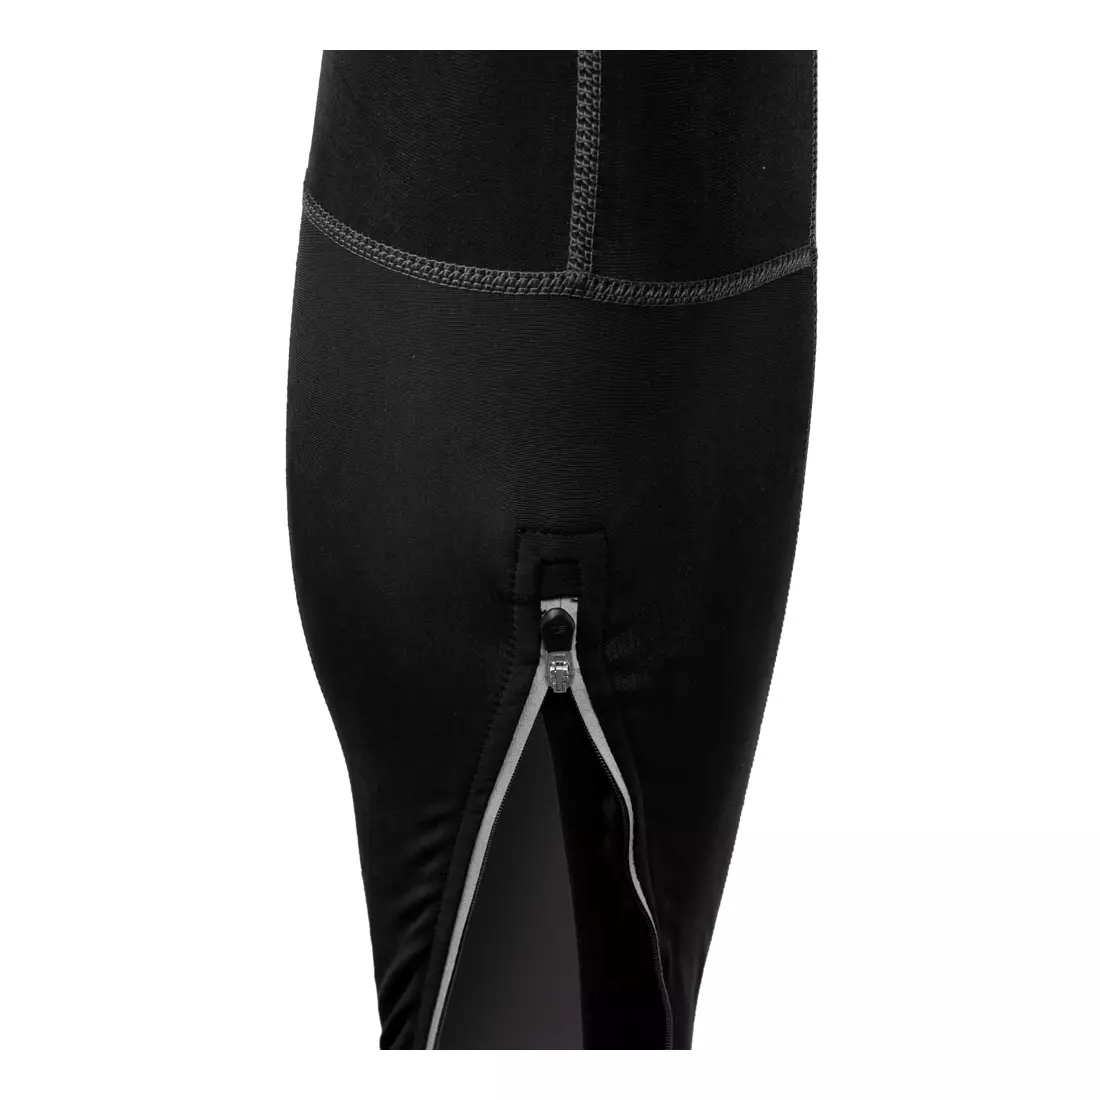 NEWLINE BIKE ROUBAIX OVERALL - športové nohavice s podbradníkom 21417-060